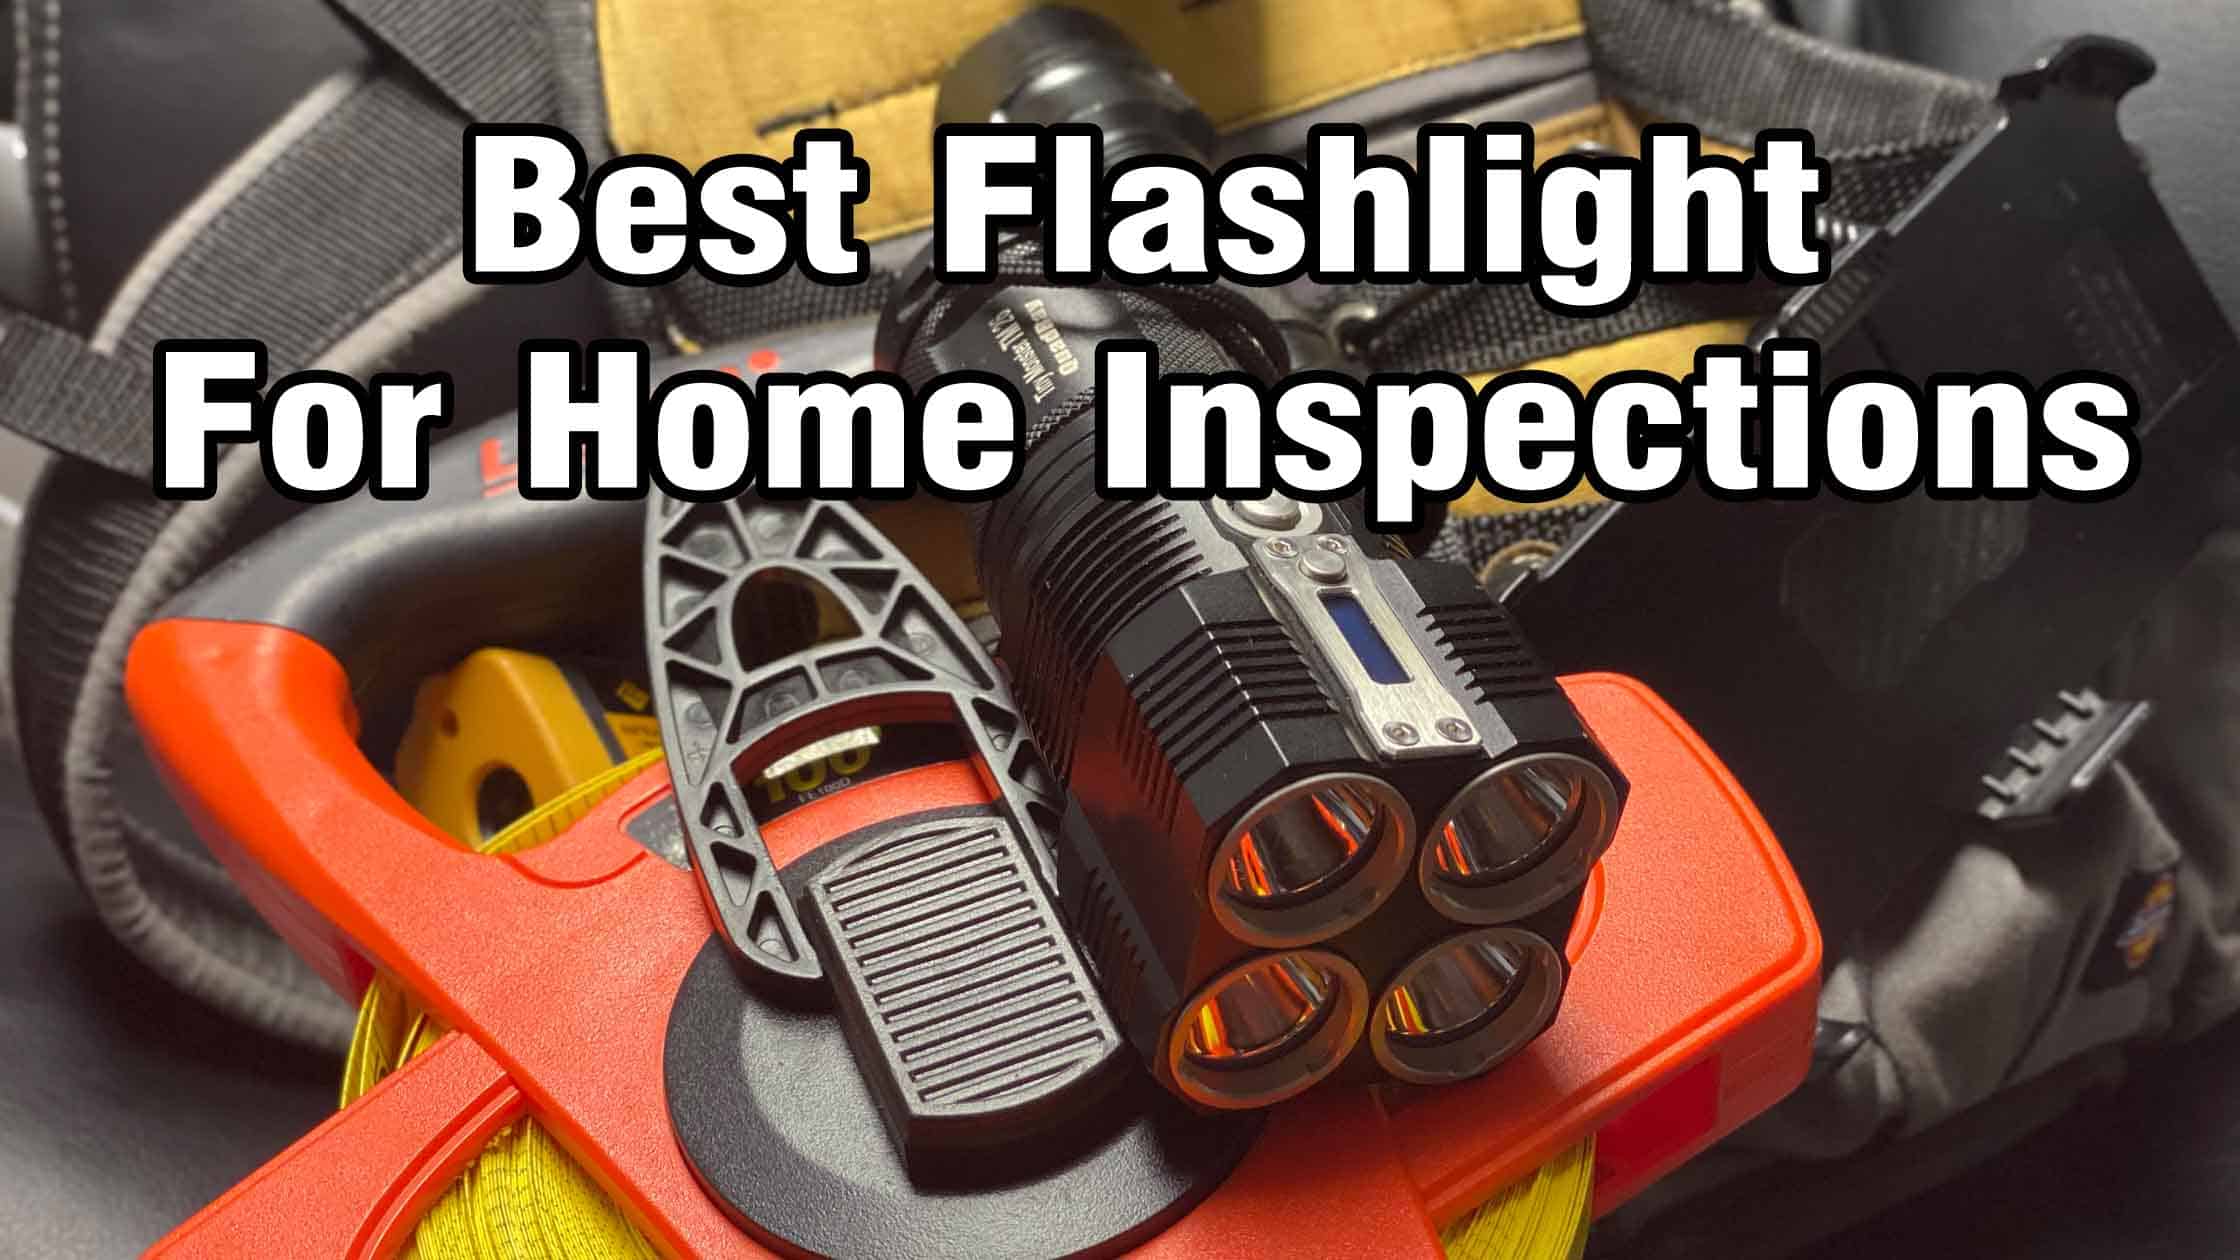 Best Flashlight For Home Inspection